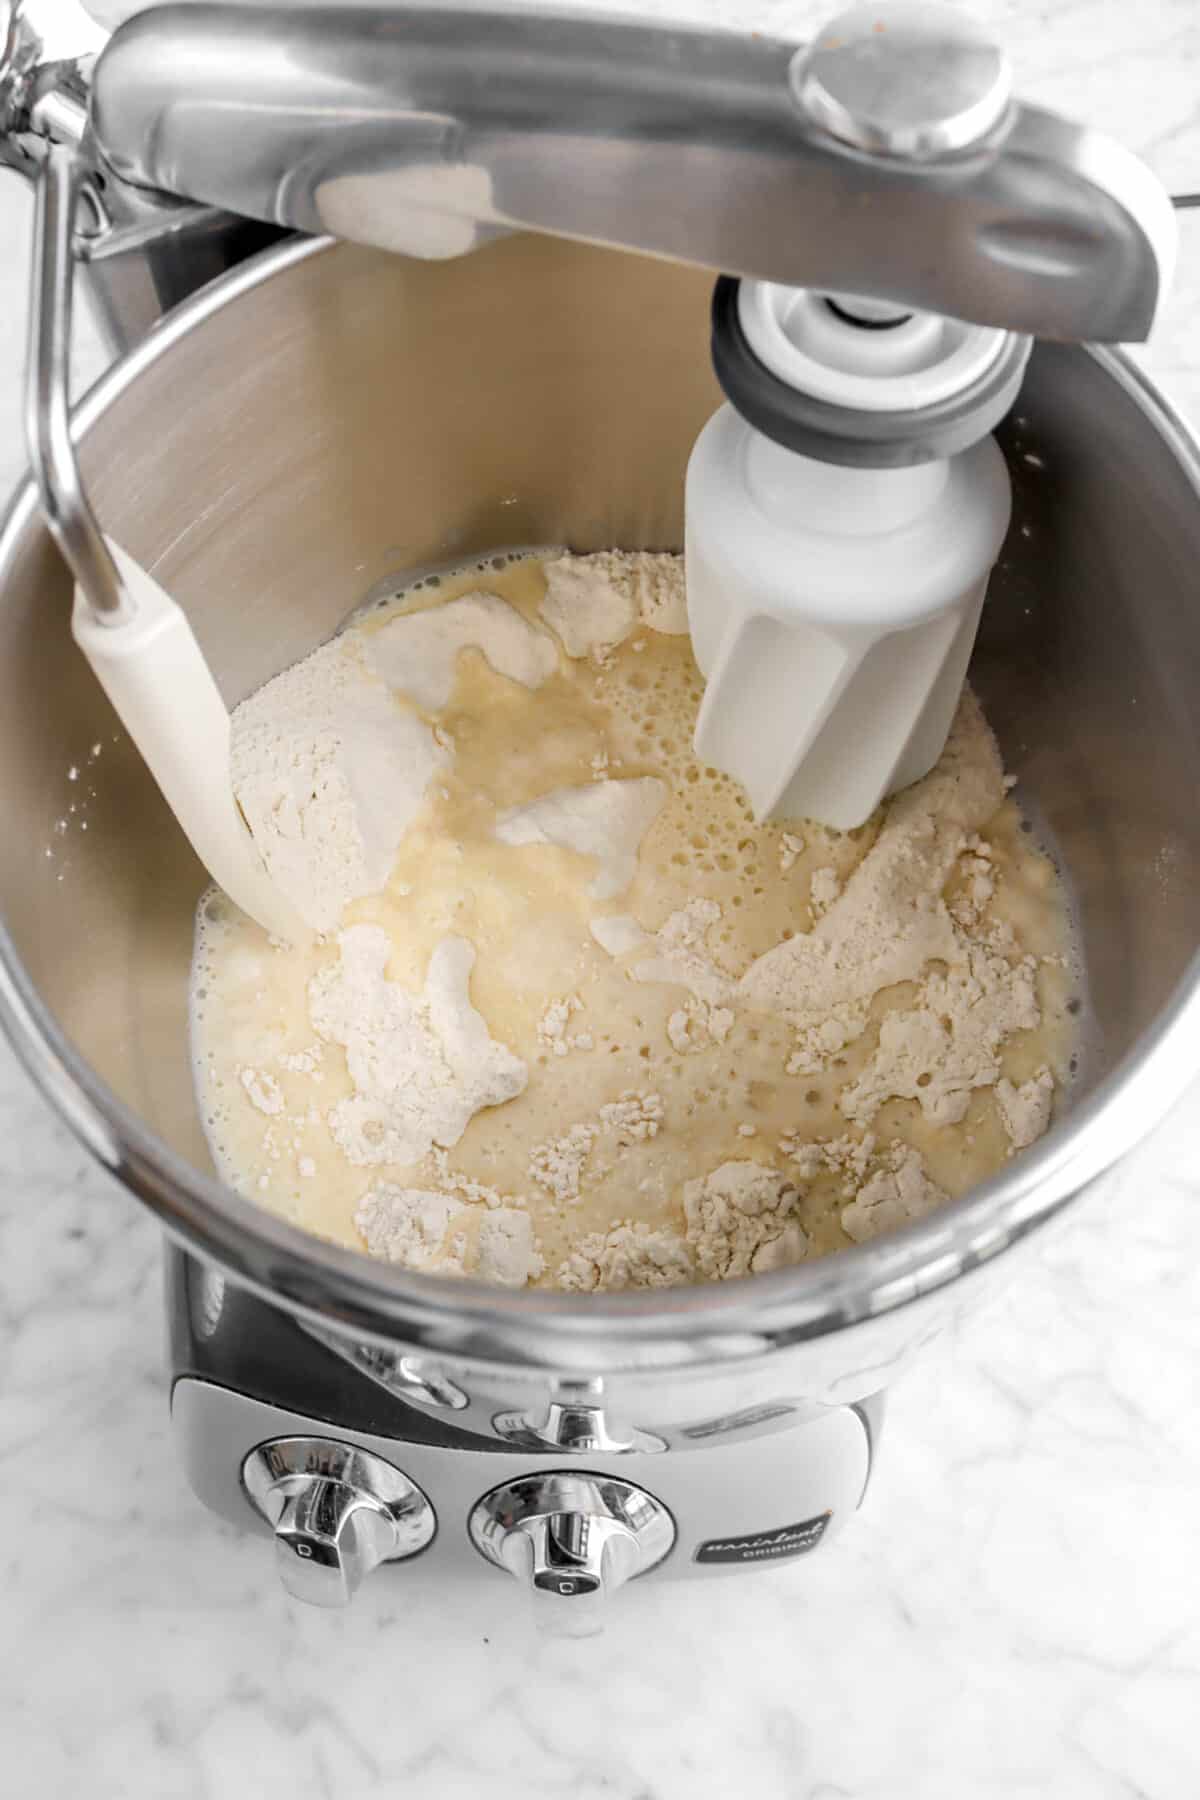 milk mixture added to dry ingredients